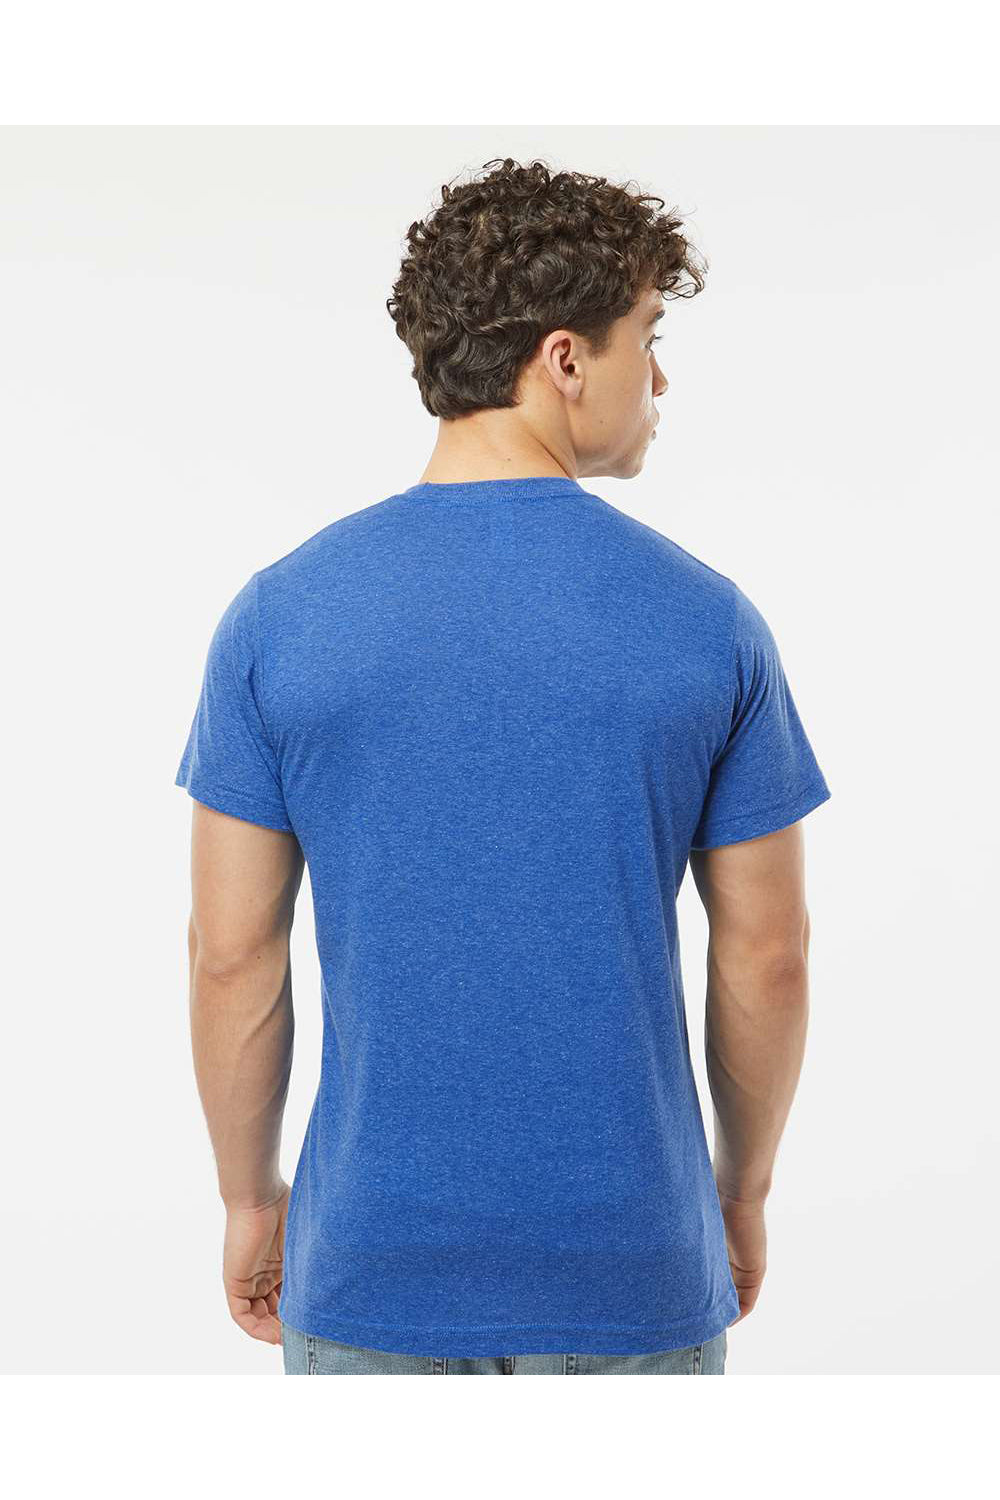 Tultex 241 Mens Poly-Rich Short Sleeve Crewneck T-Shirt Heather Royal Blue Model Back